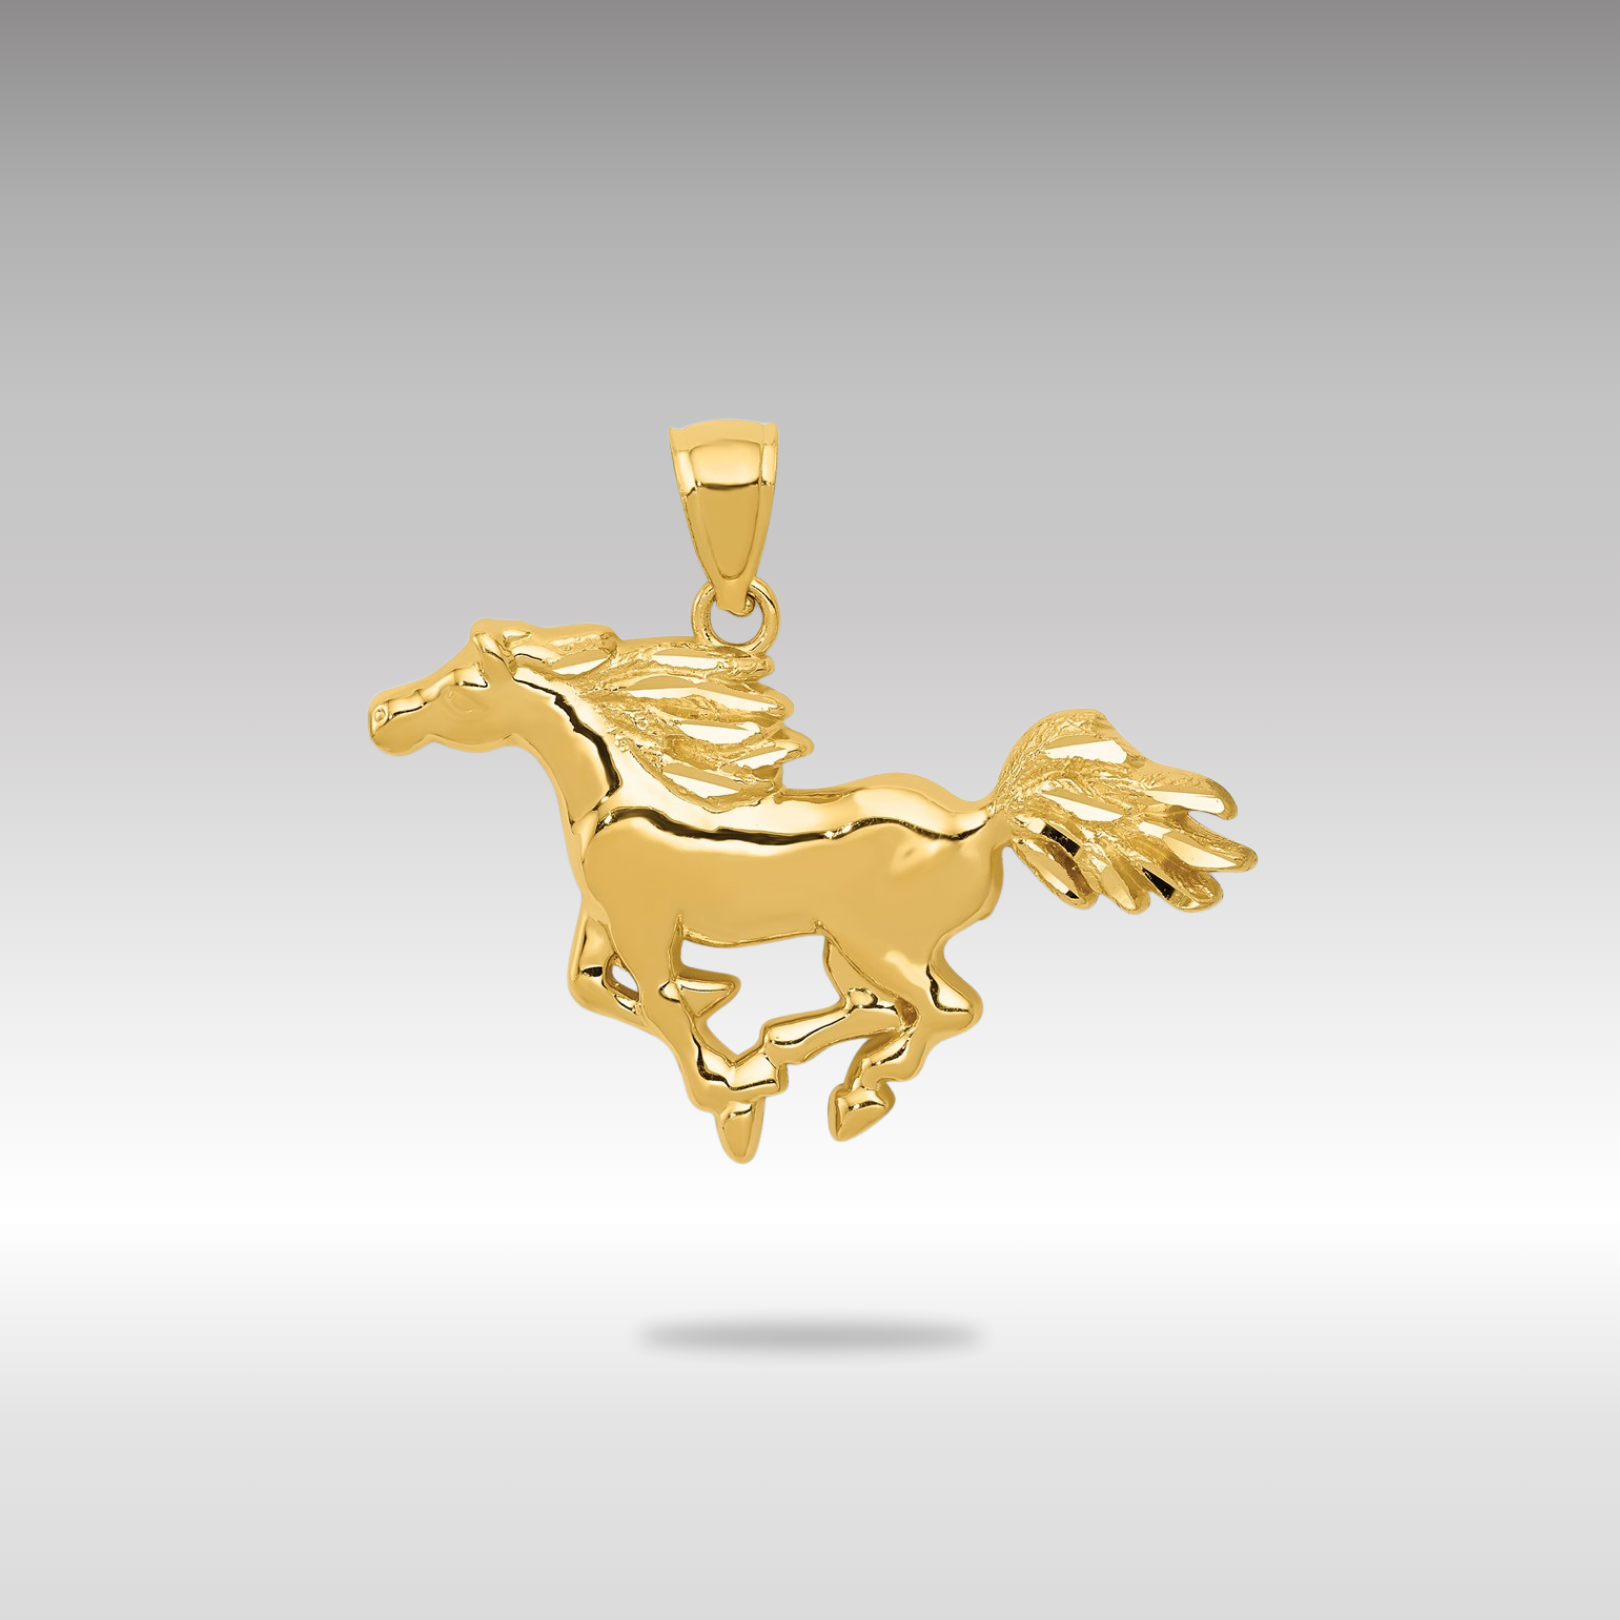 Gold Medium Polished Horse Necklace Pendant Model-4041 - Charlie & Co. Jewelry